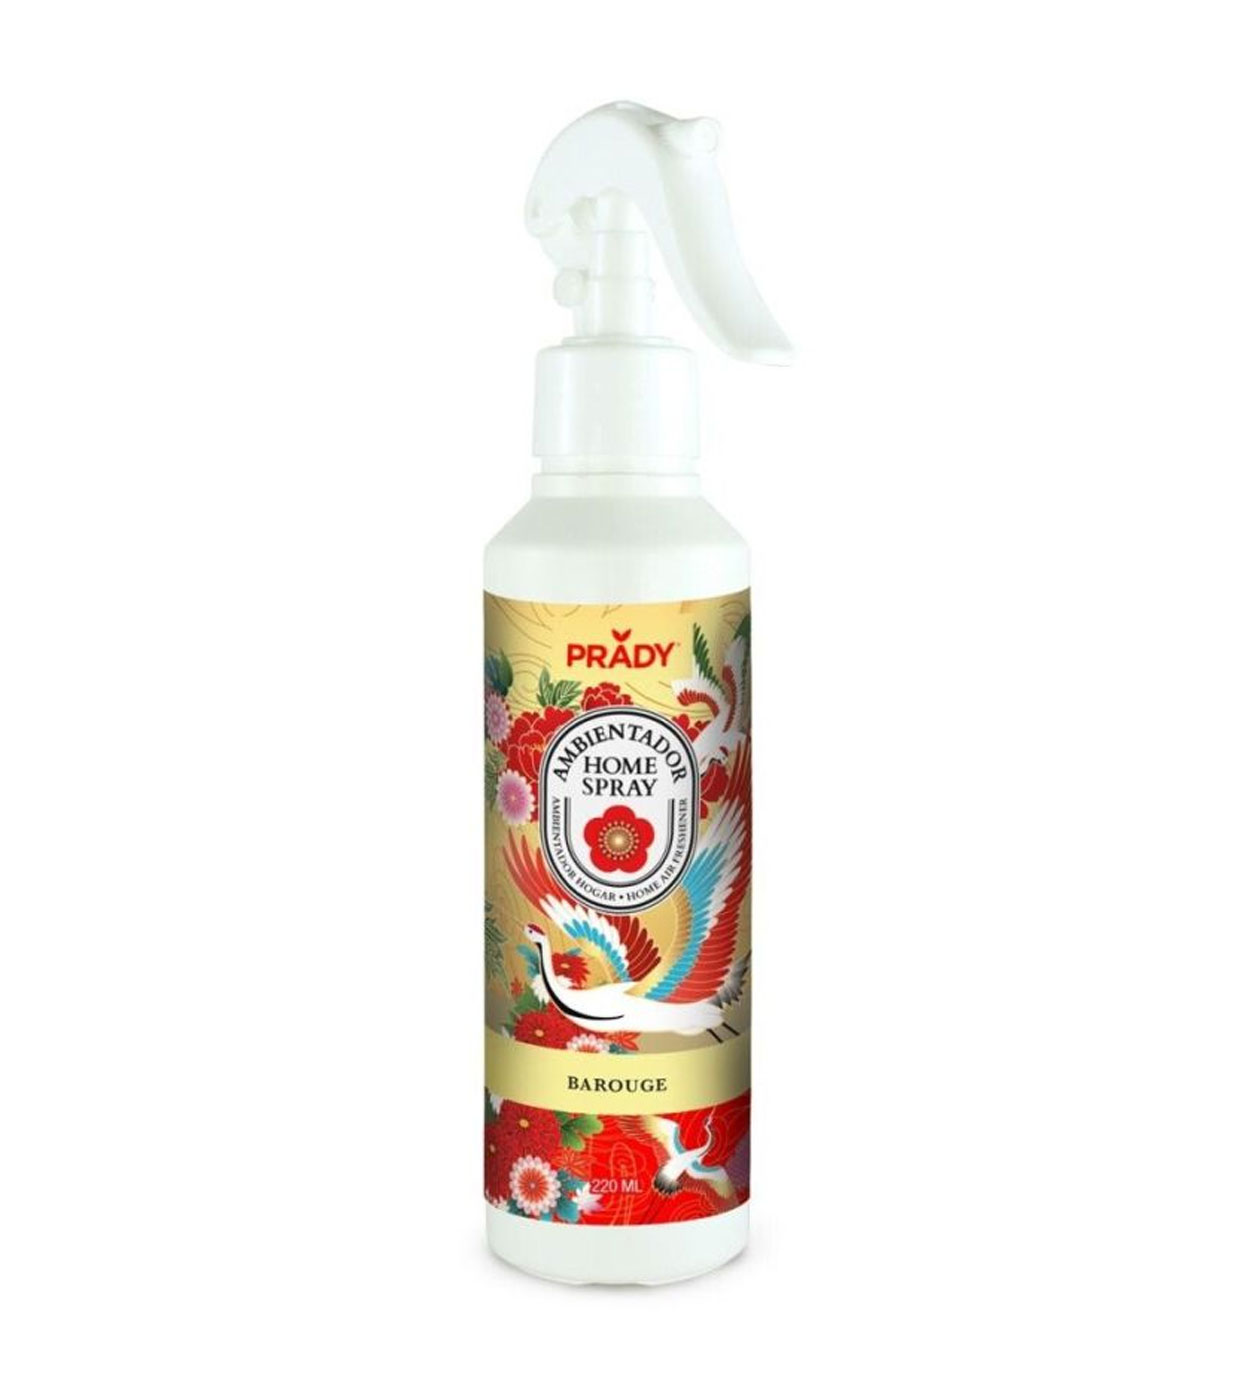 Prady - Deodorante spray per ambienti - Dama de Noche